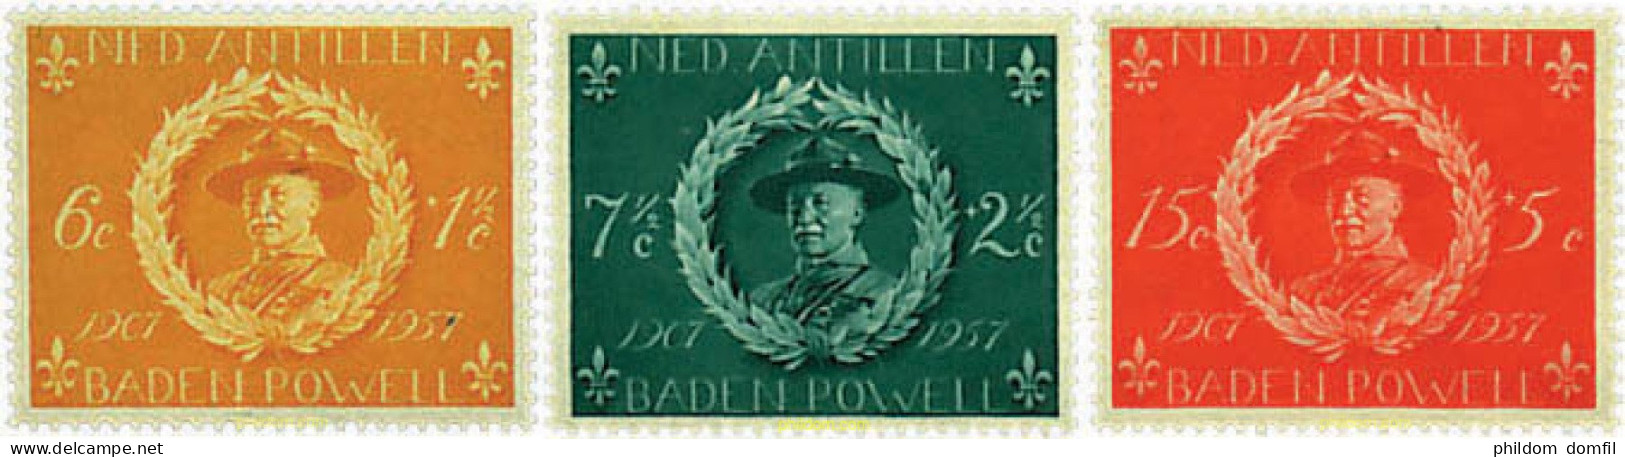 38694 MNH ANTILLAS HOLANDESAS 1957 50 ANIVERSARIO DEL ESCULTISMO - Antilles